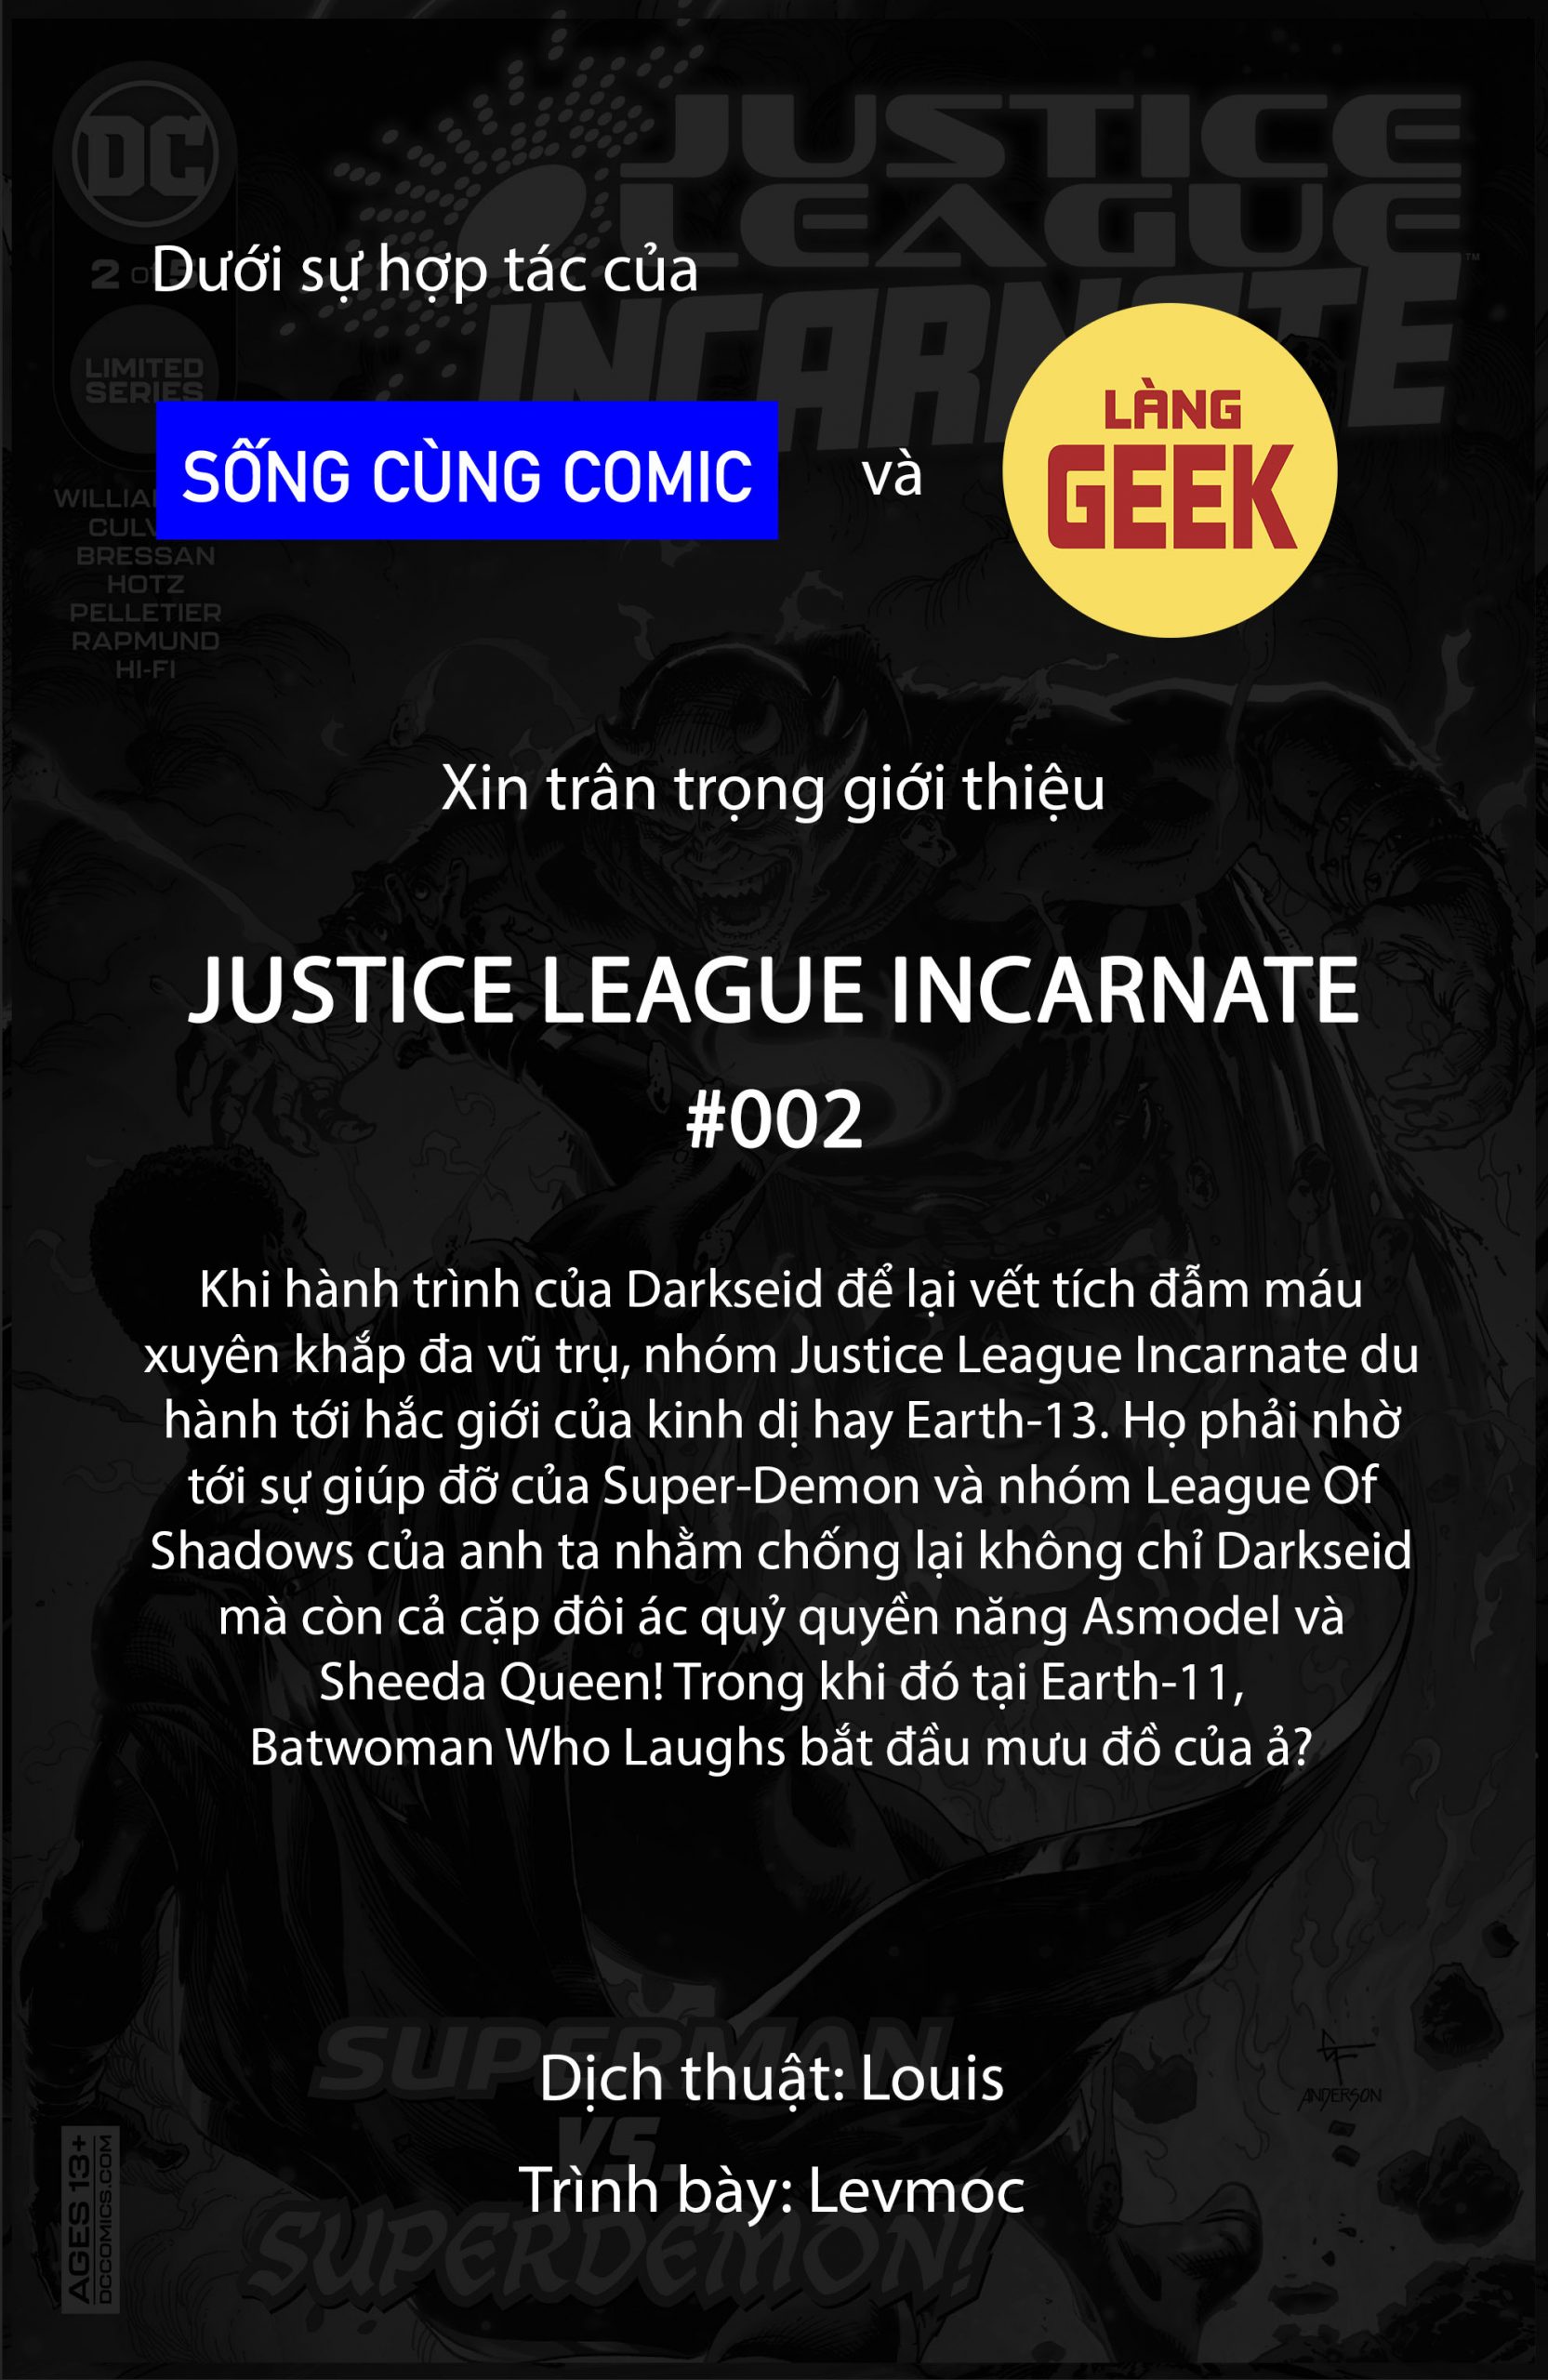 https://langgeek.net/wp-content/uploads/2021/12/Justice-League-Incarnate-2021-002-001-scaled.jpg